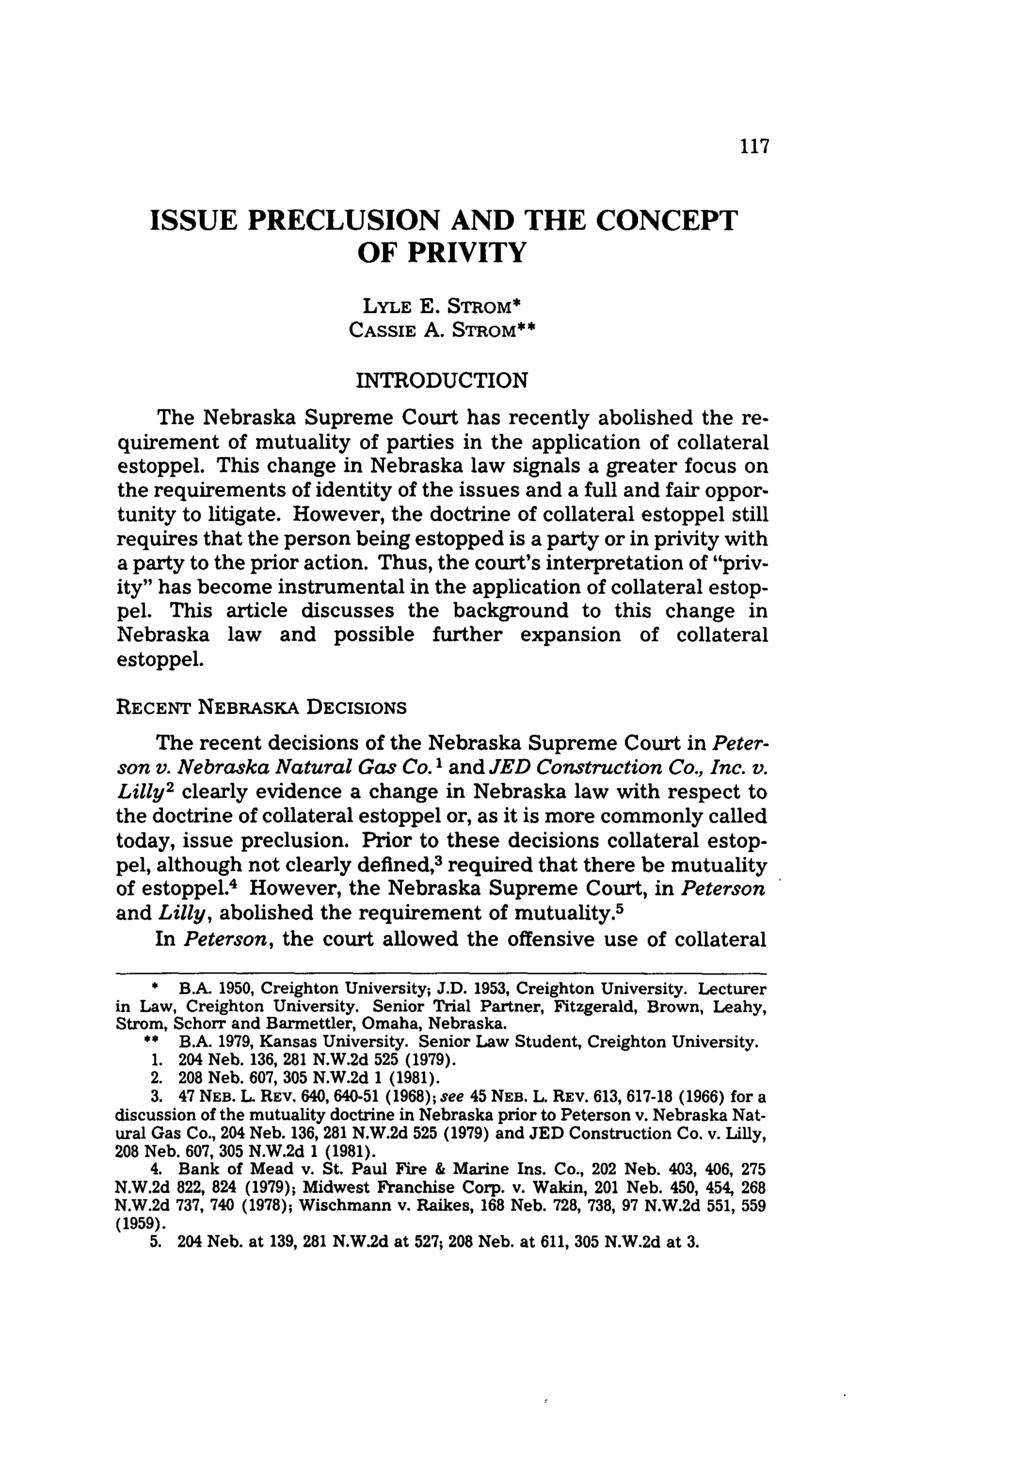 ISSUE PRECLUSION AND THE CONCEPT OF PRIVITY LYLE E. STROM* CASSIE A.